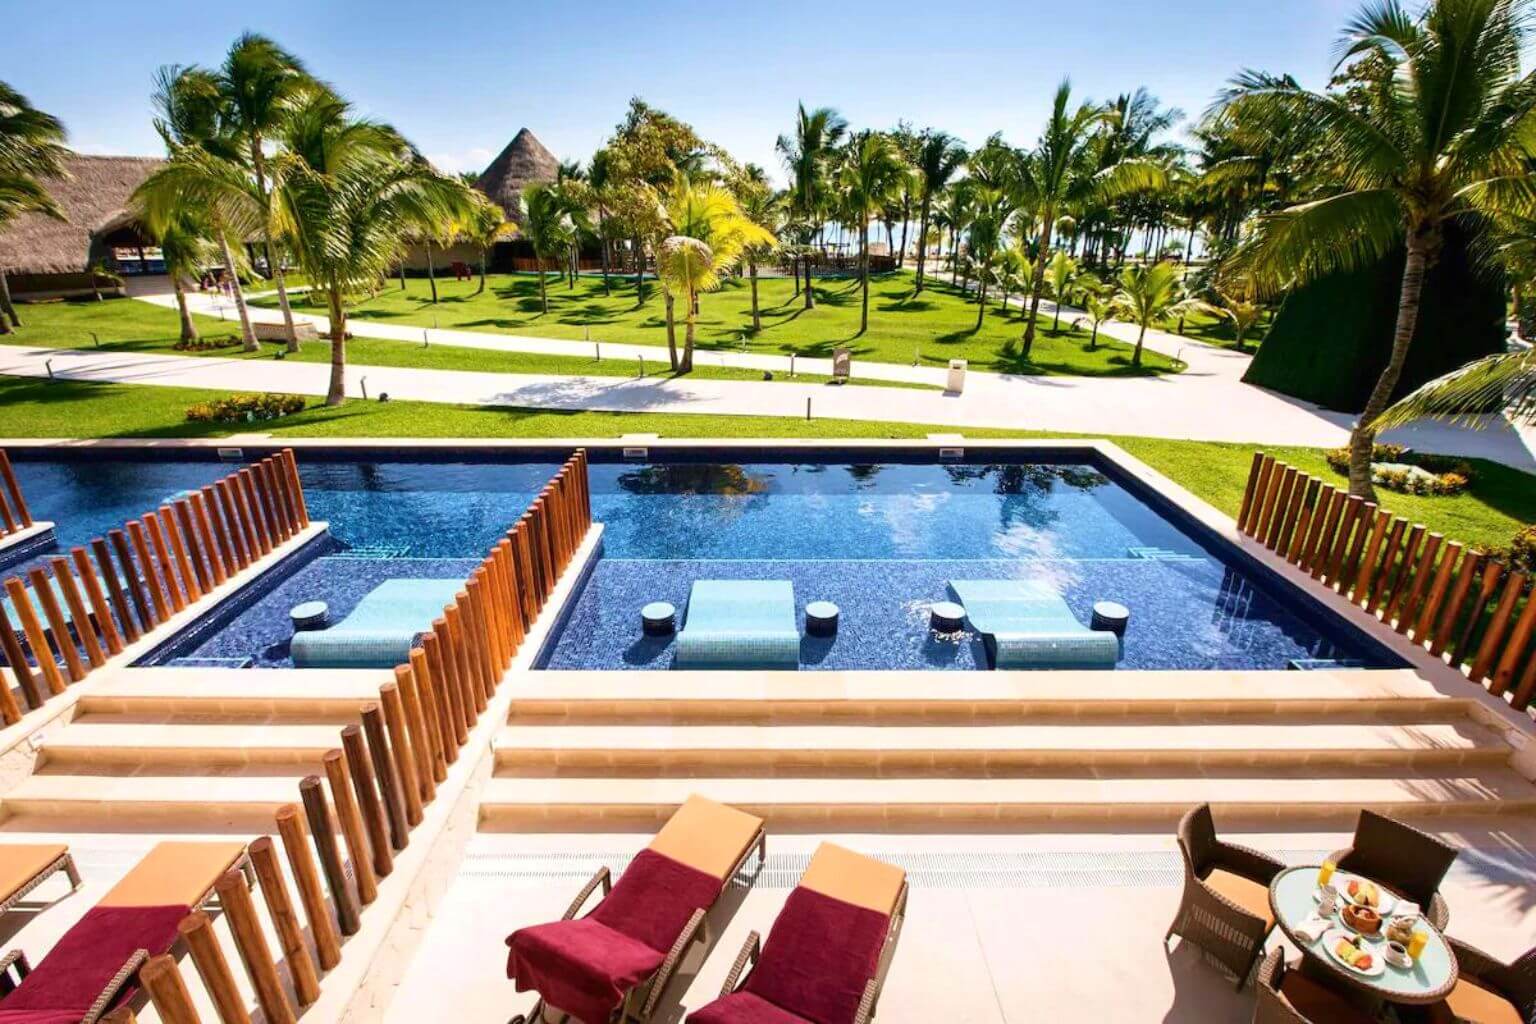 Swim up rooms at the Barcelo Maya Caribe Hotel.